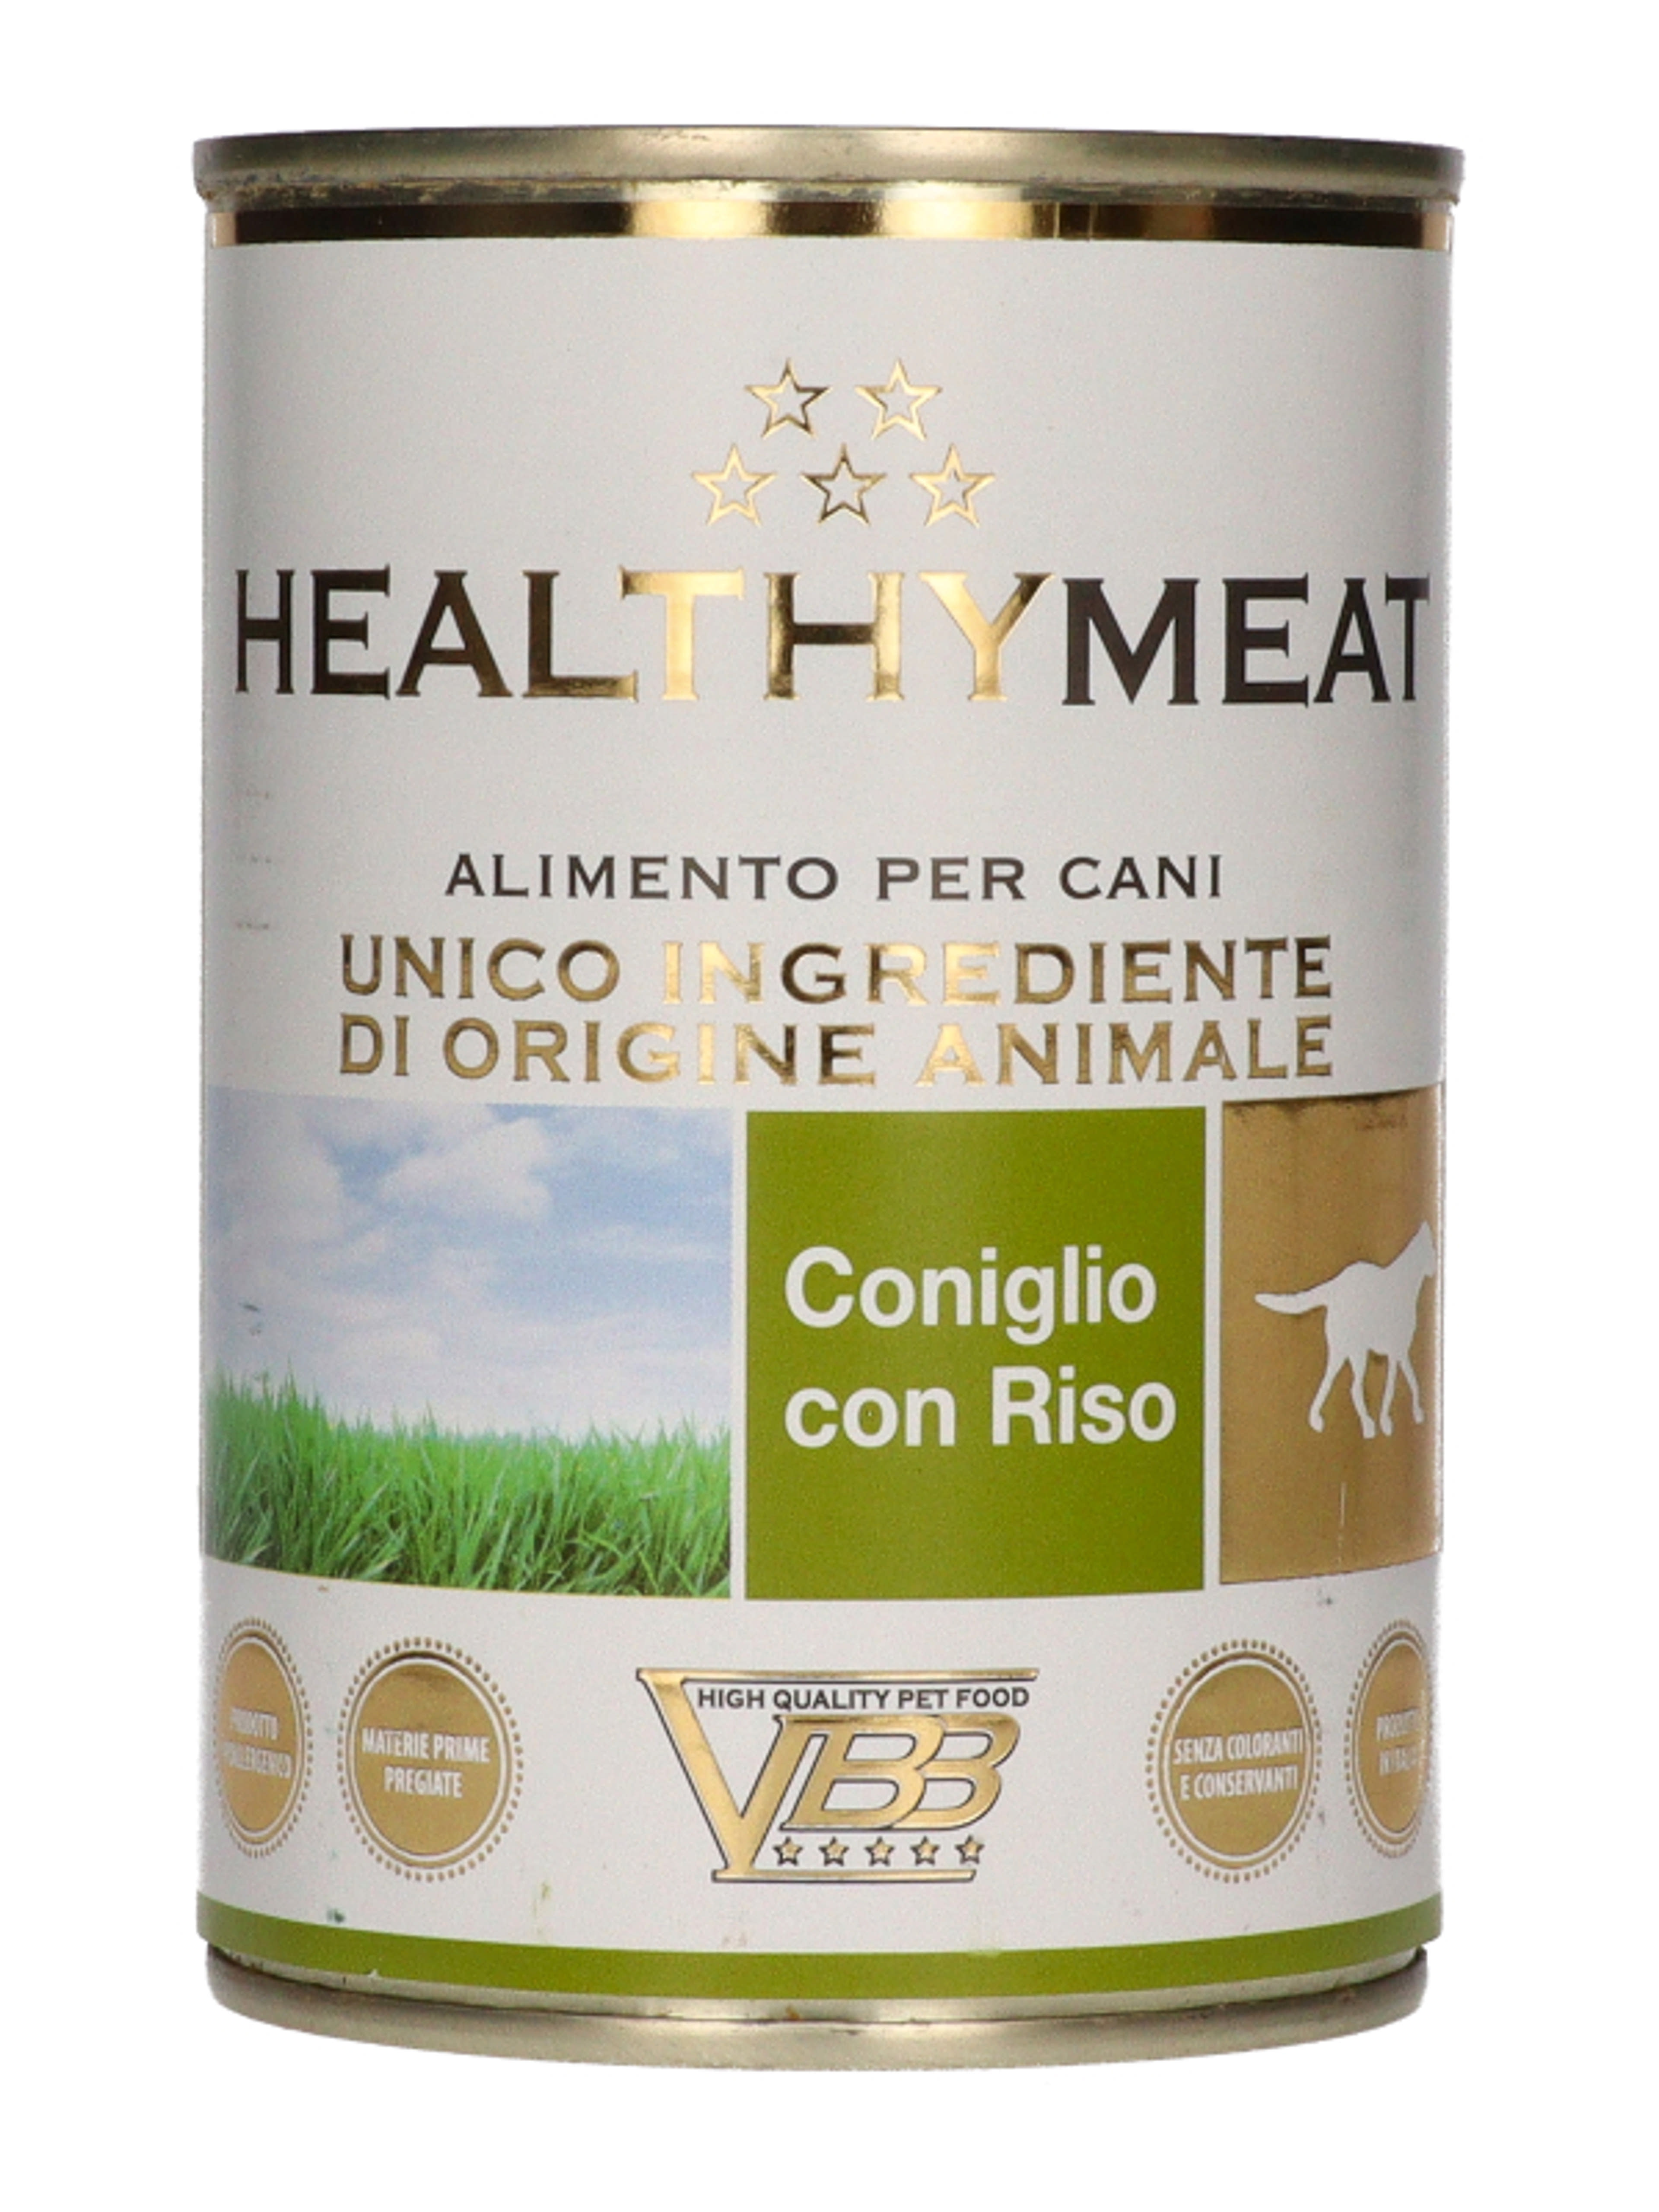 Healthy Meat Pate konzerv kutyáknak nyúl hússal - 400 g